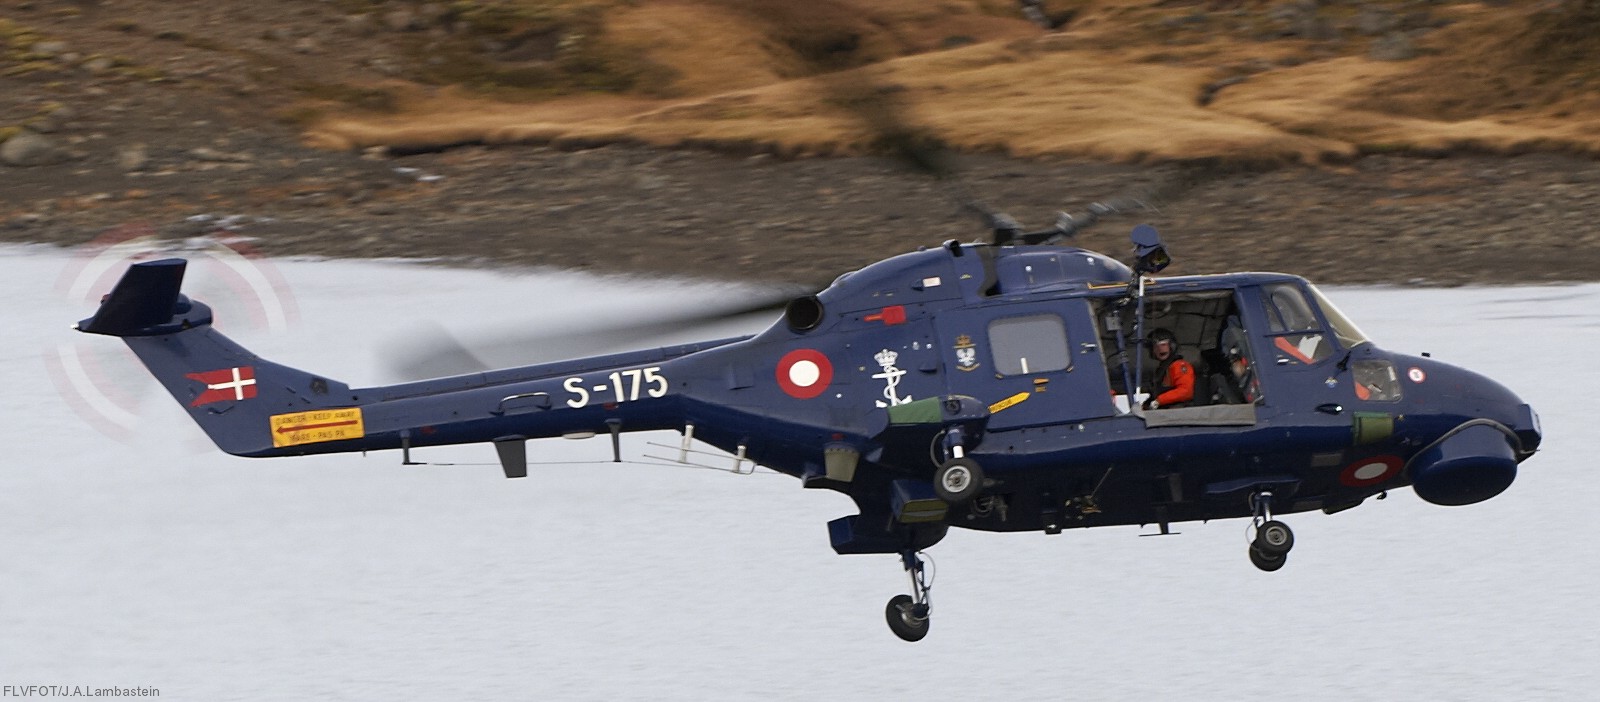 lynx mk.80 mk.90b helicopter westland royal danish navy air force kongelige danske marine flyvevabnet s-175 20